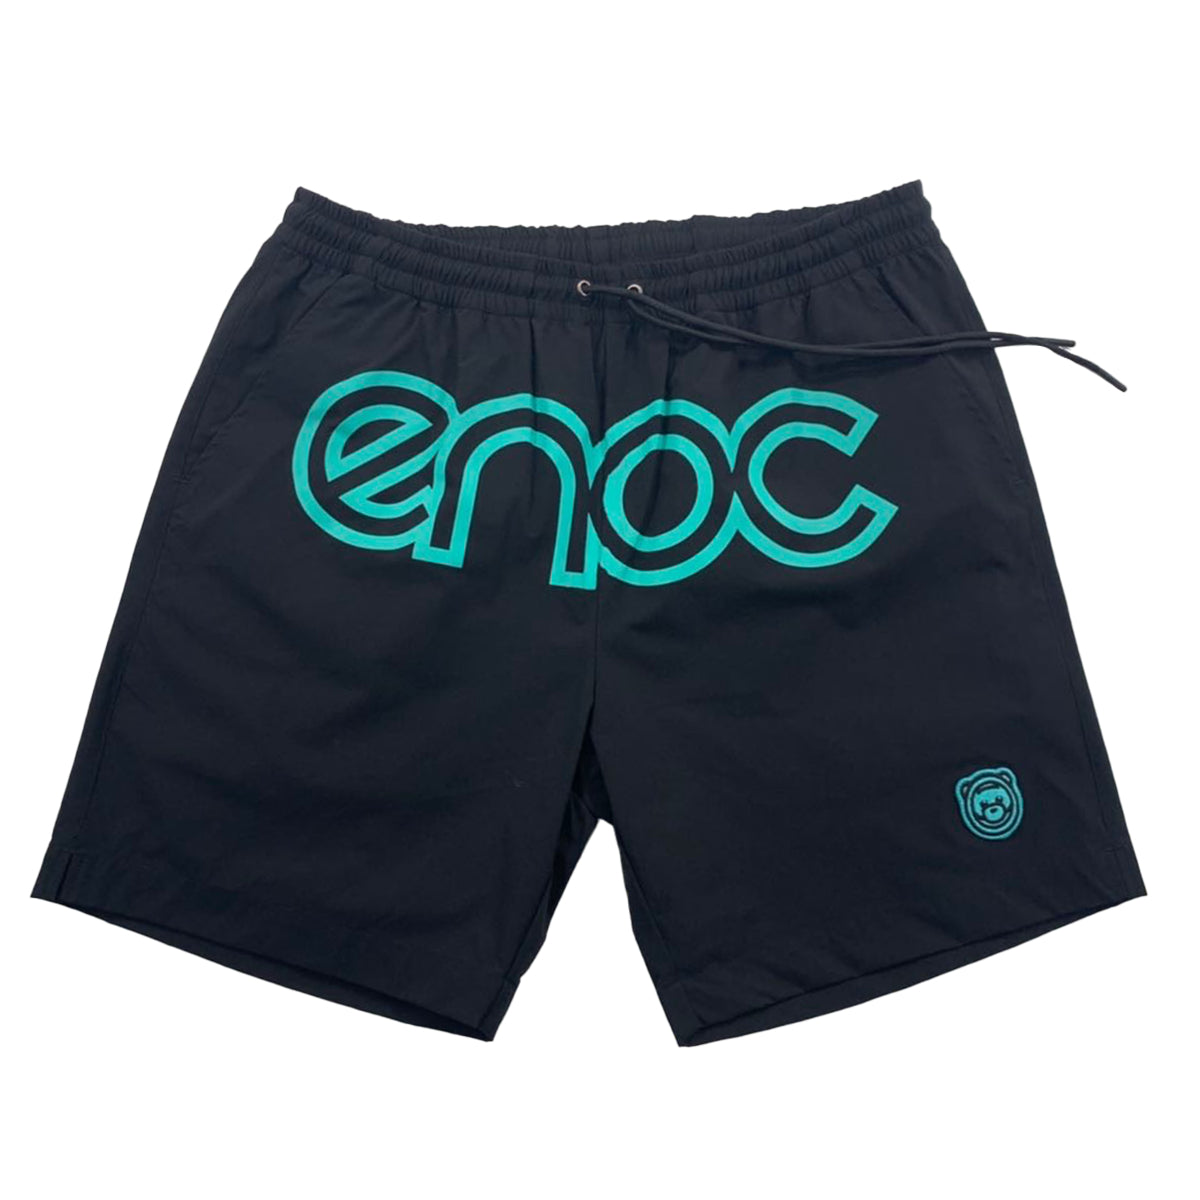 ENOC Black Shorts